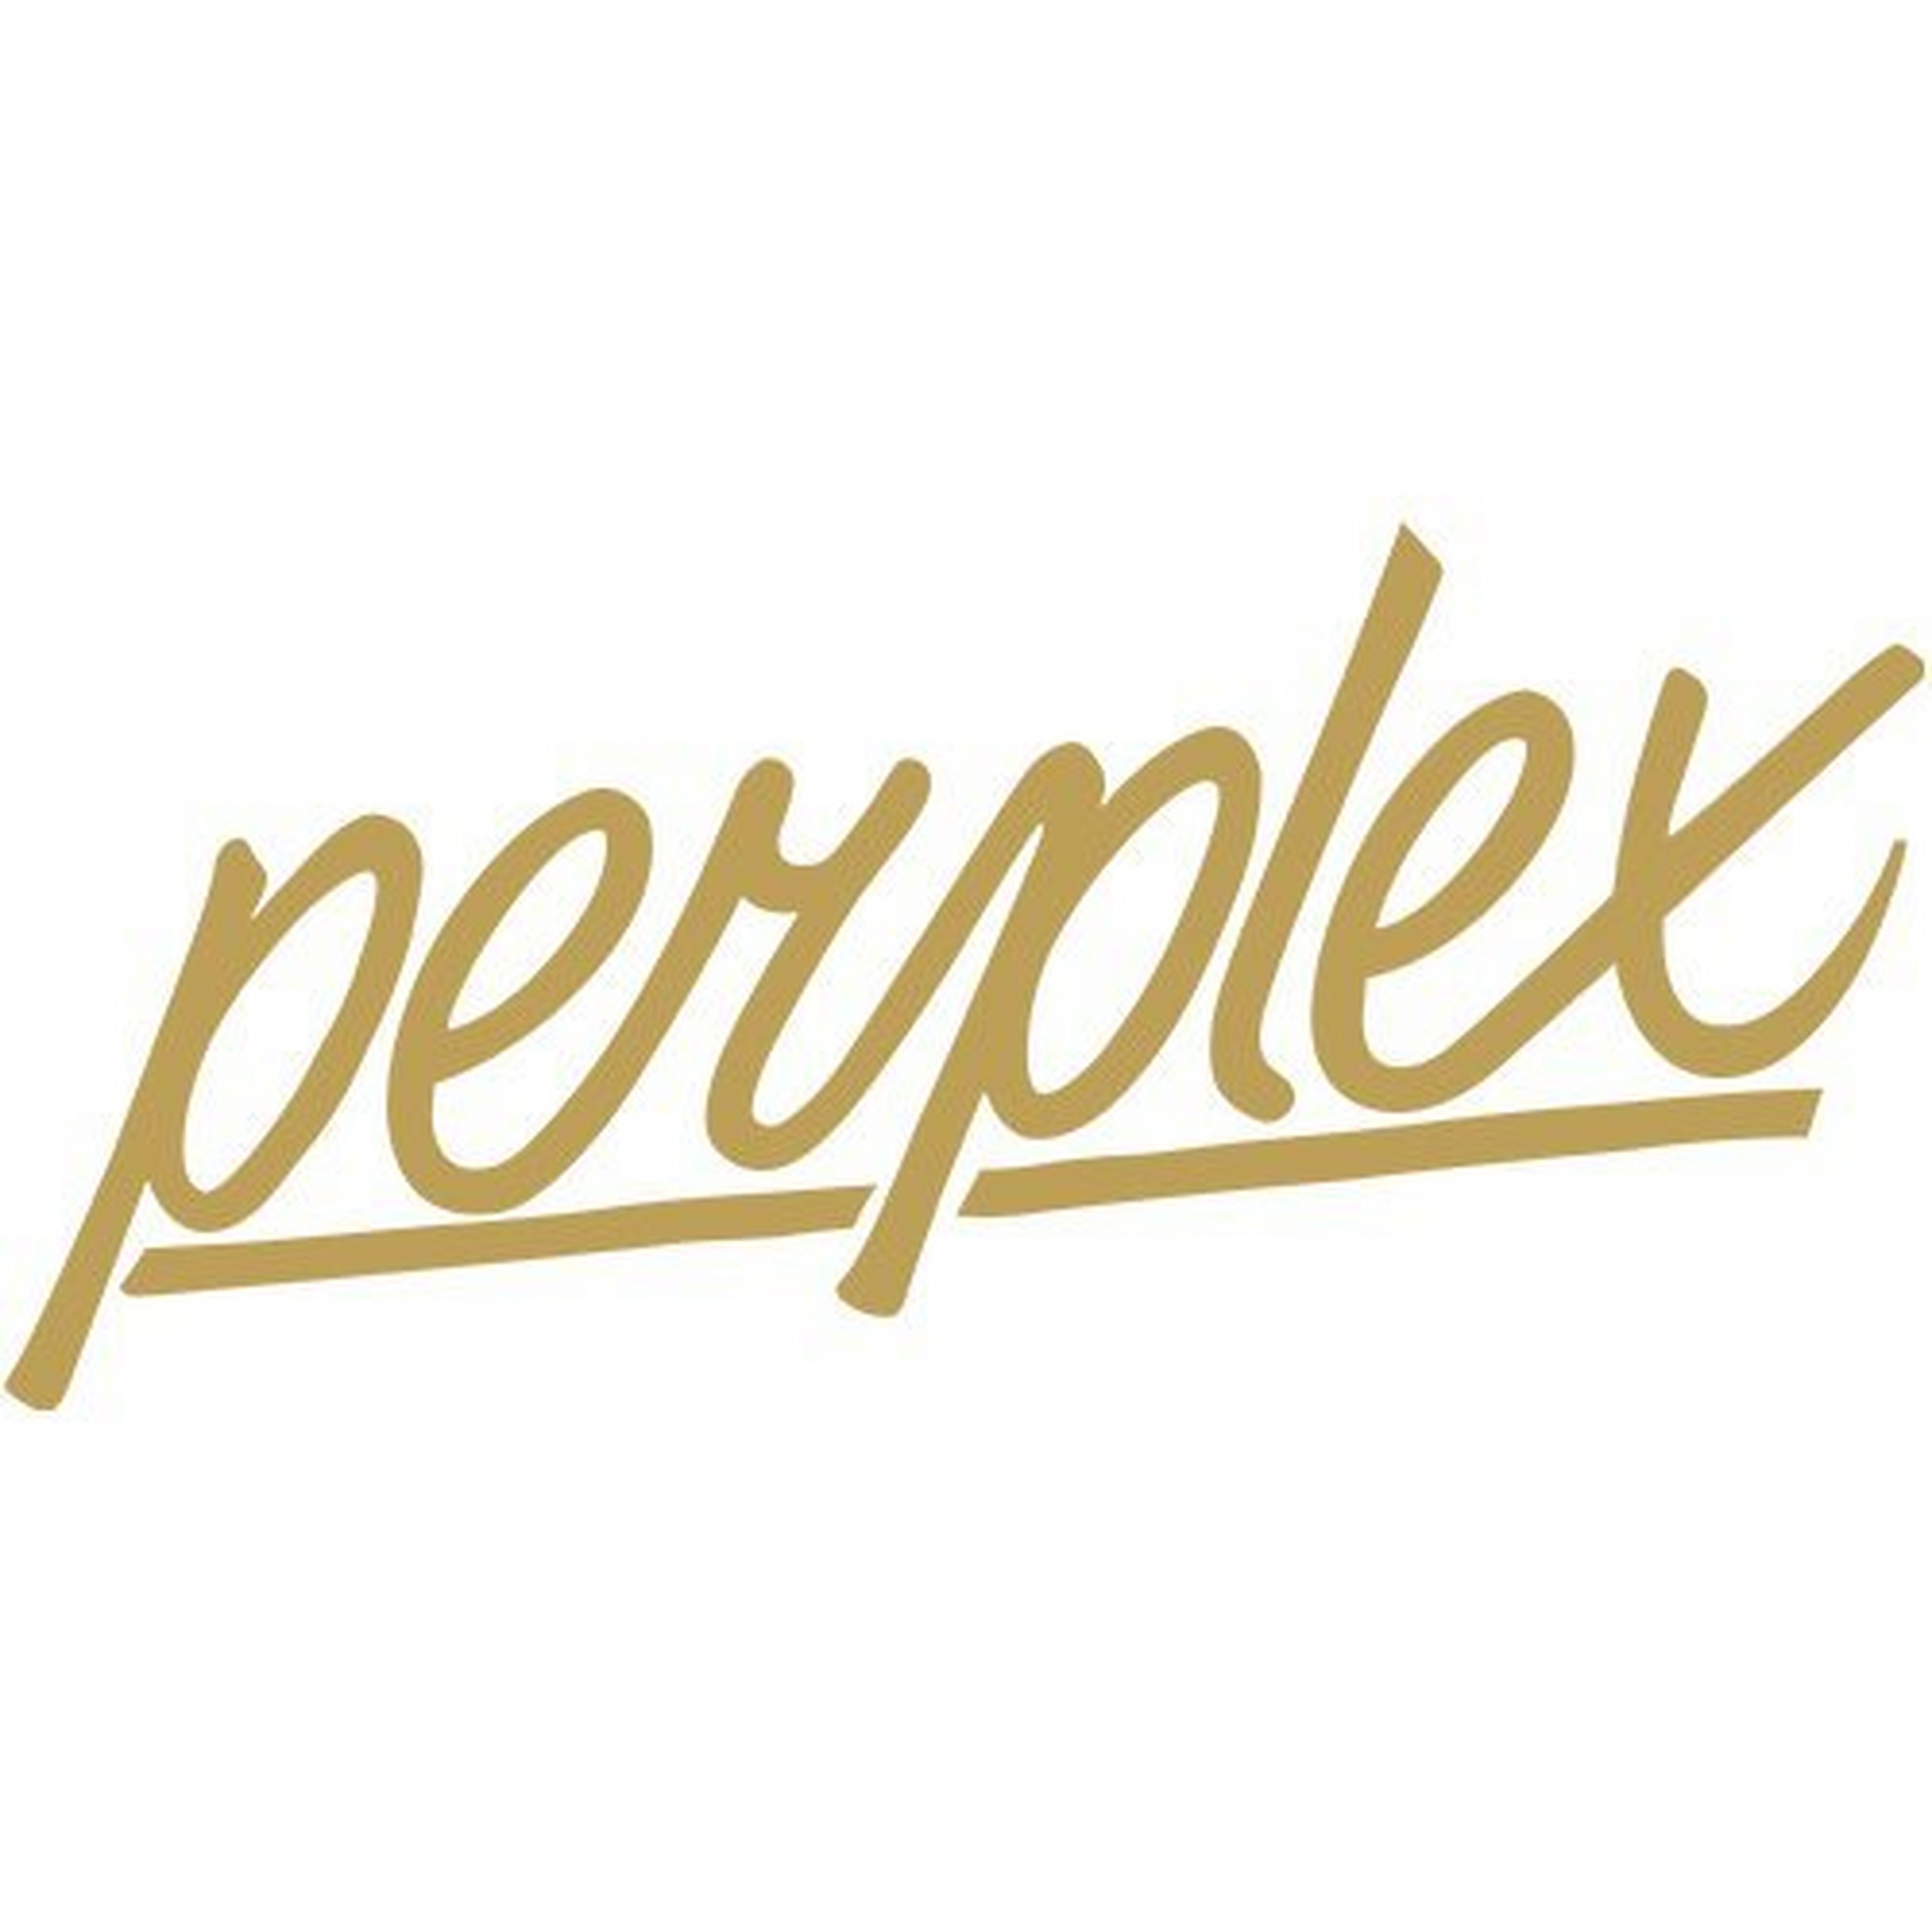 Perplex logotype